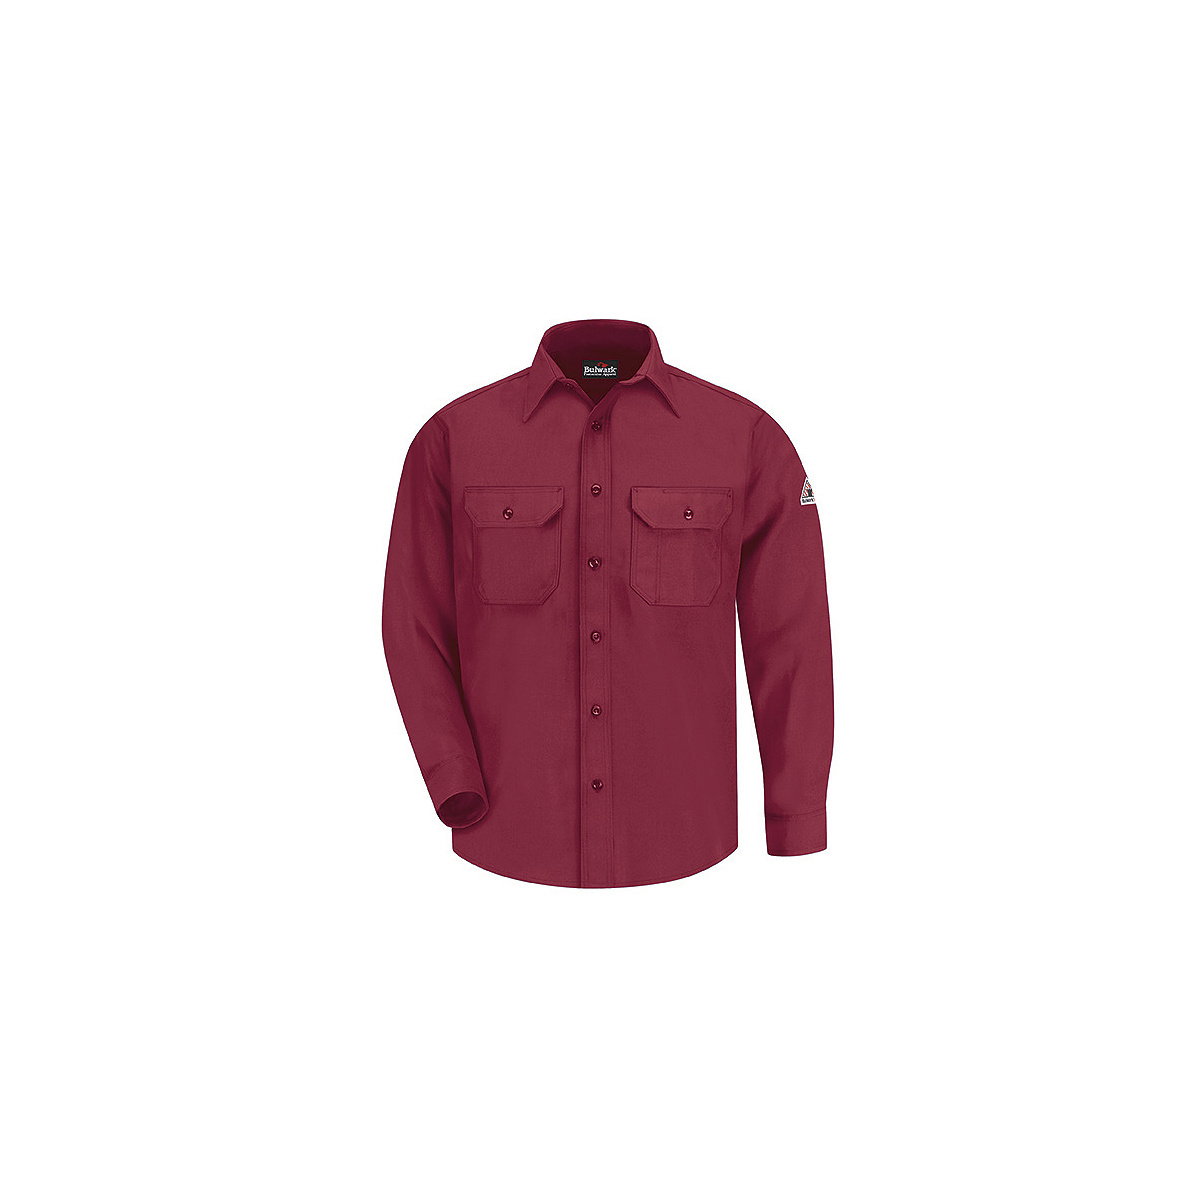 Bulwark® 3X Tall Red Nomex® IIIA/Nomex® Aramid/Kevlar® Aramid Flame Resistant Uniform Shirt With Button Front Closure